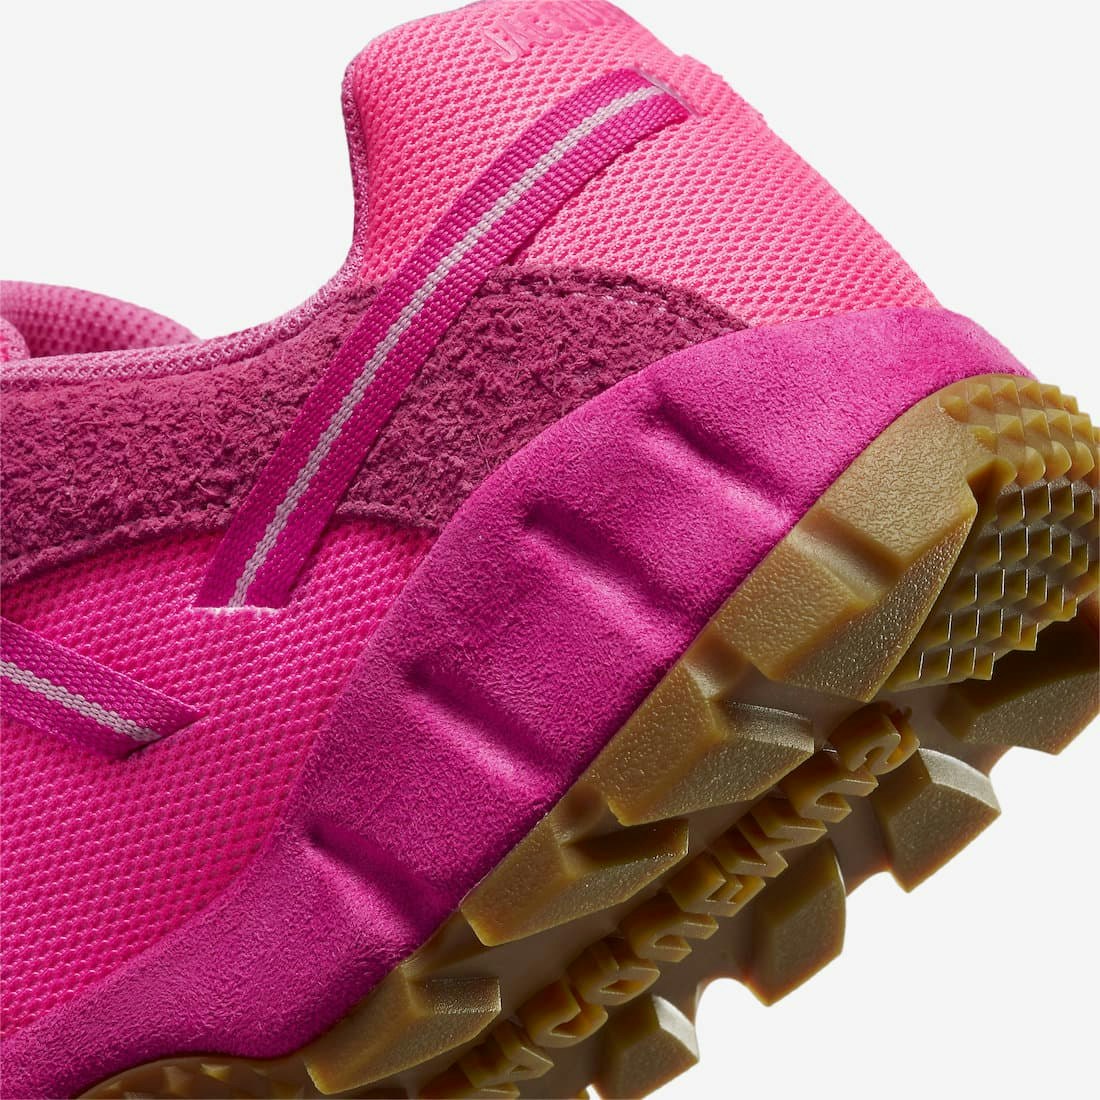 Jacquemus x Nike Air Humara “Pink”